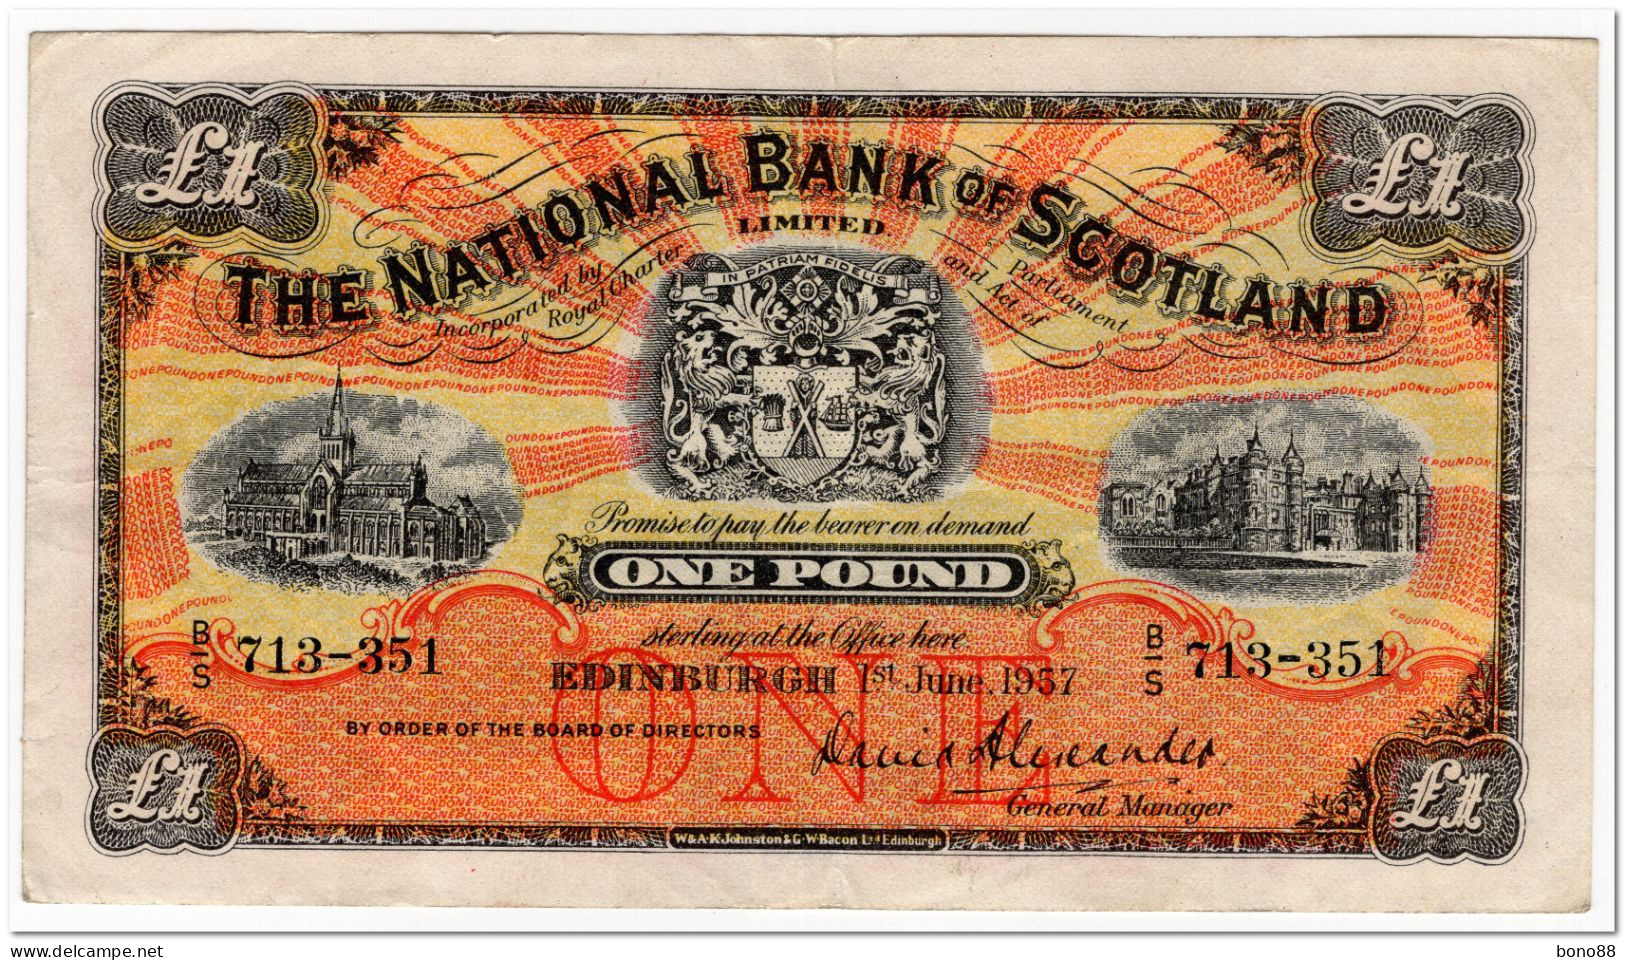 SCOTLAND,THE NATIONAL BANK OF SCOTLAND,1 POUND,1957,P.258c,VF++ - 1 Pound